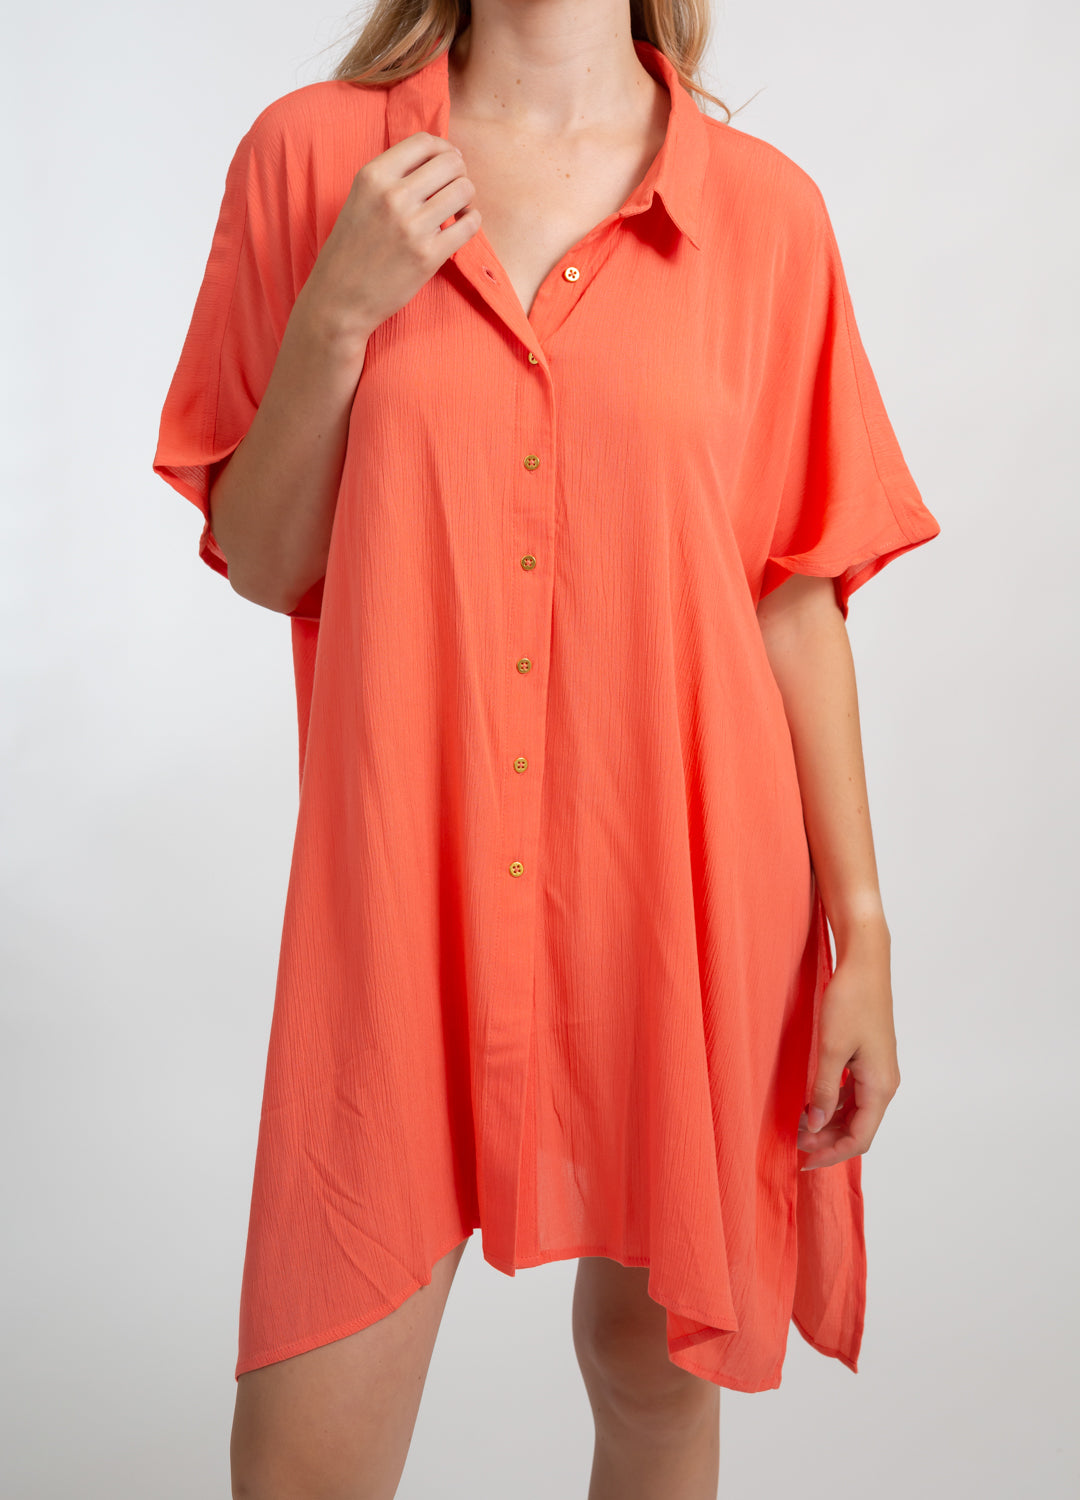 Koy Resort Miami Big Shirt Dress in Punch orange at Inner Beach Co, Toronto, Ontario, Canada